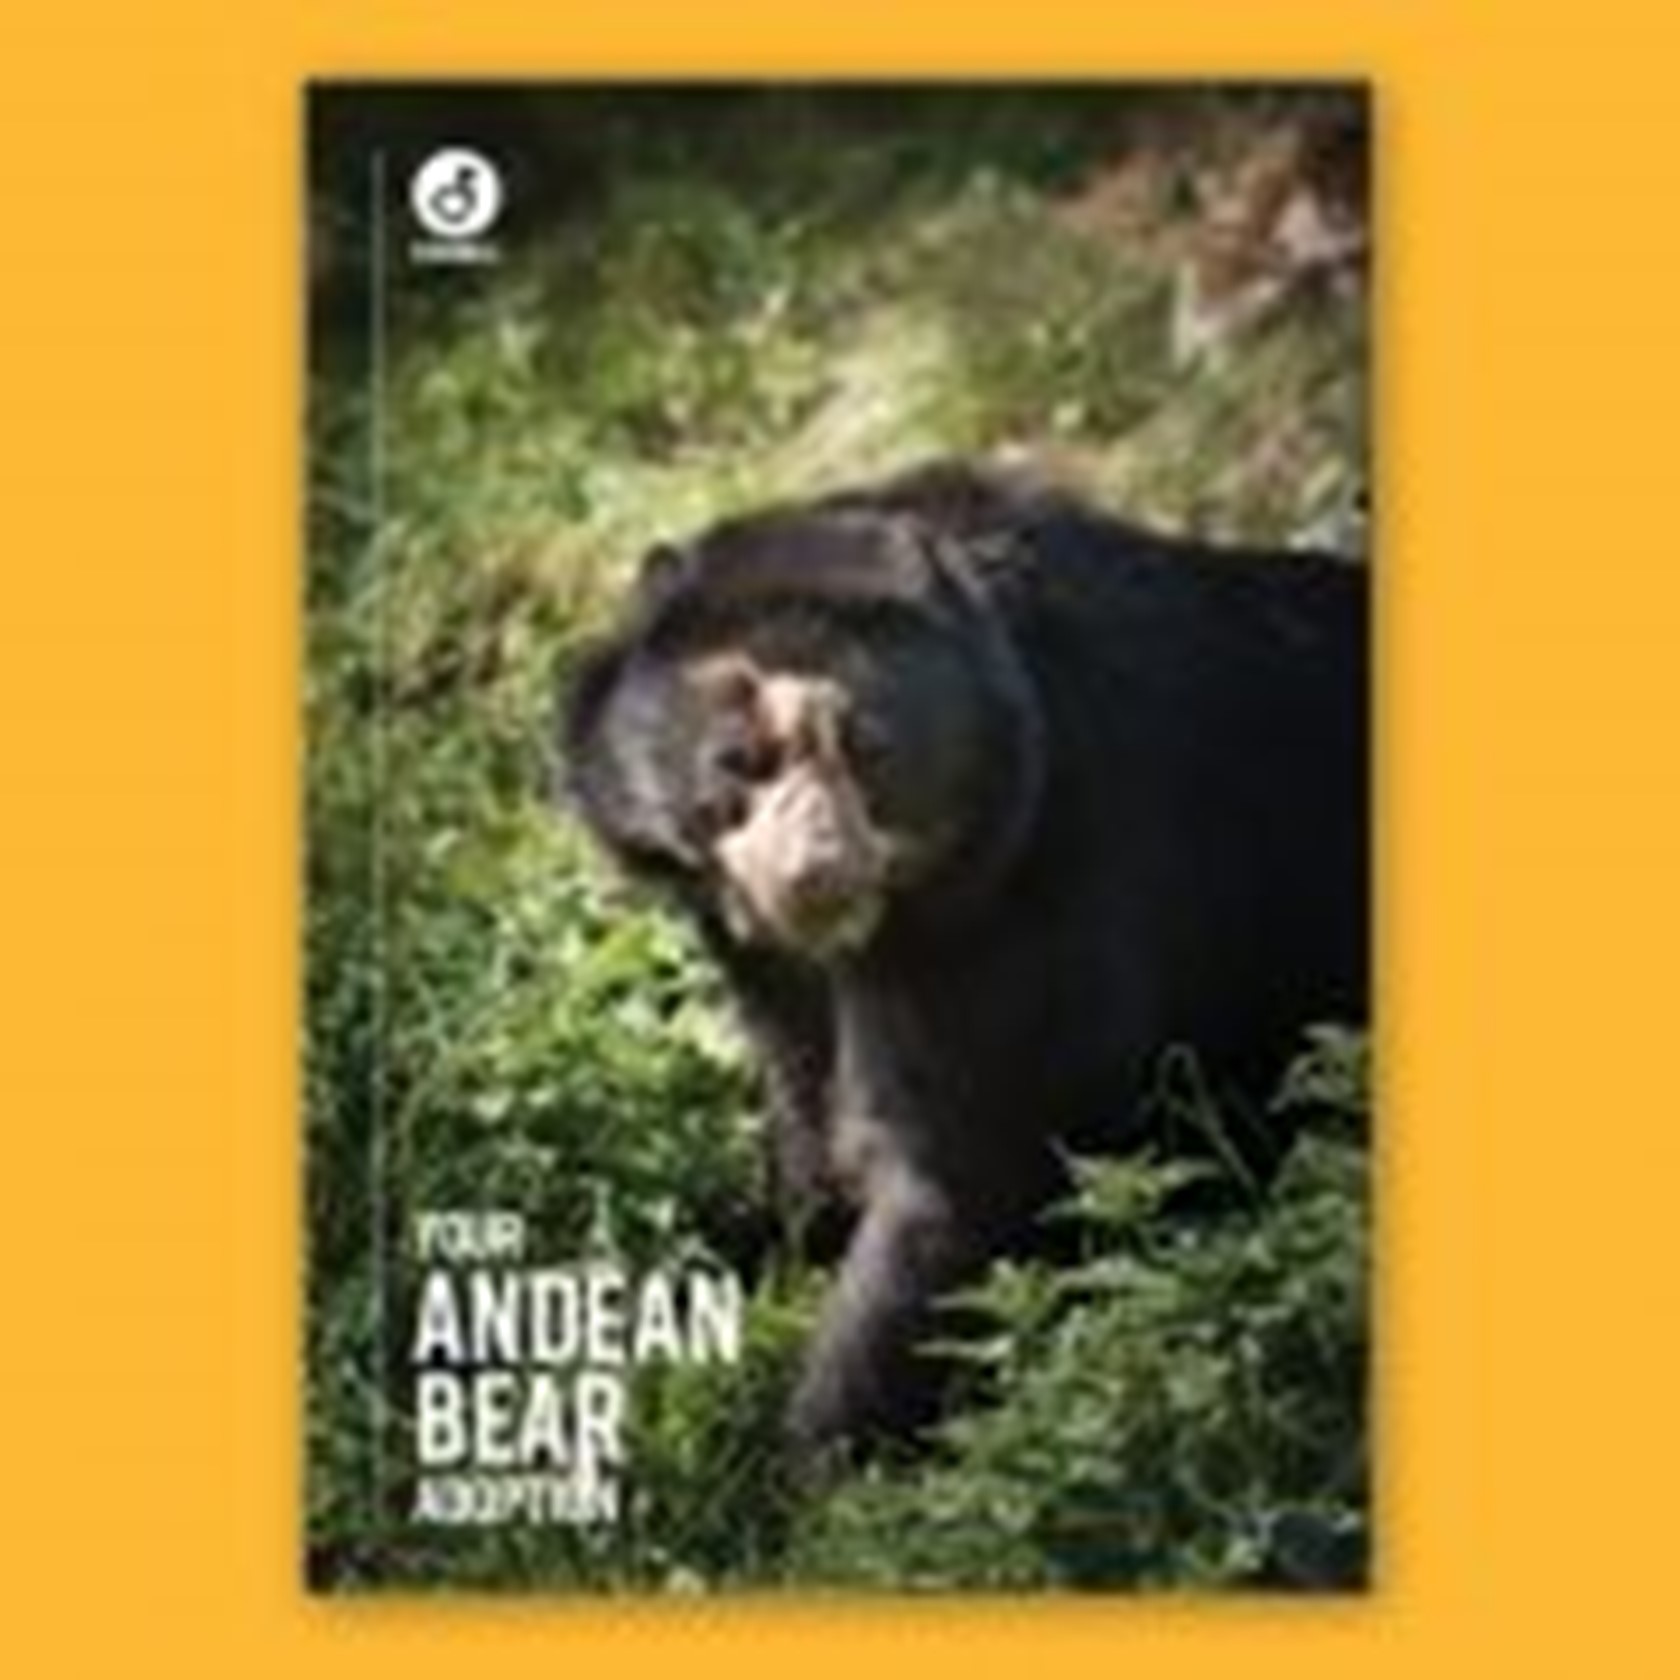 Digital Adoption - Andean Bear